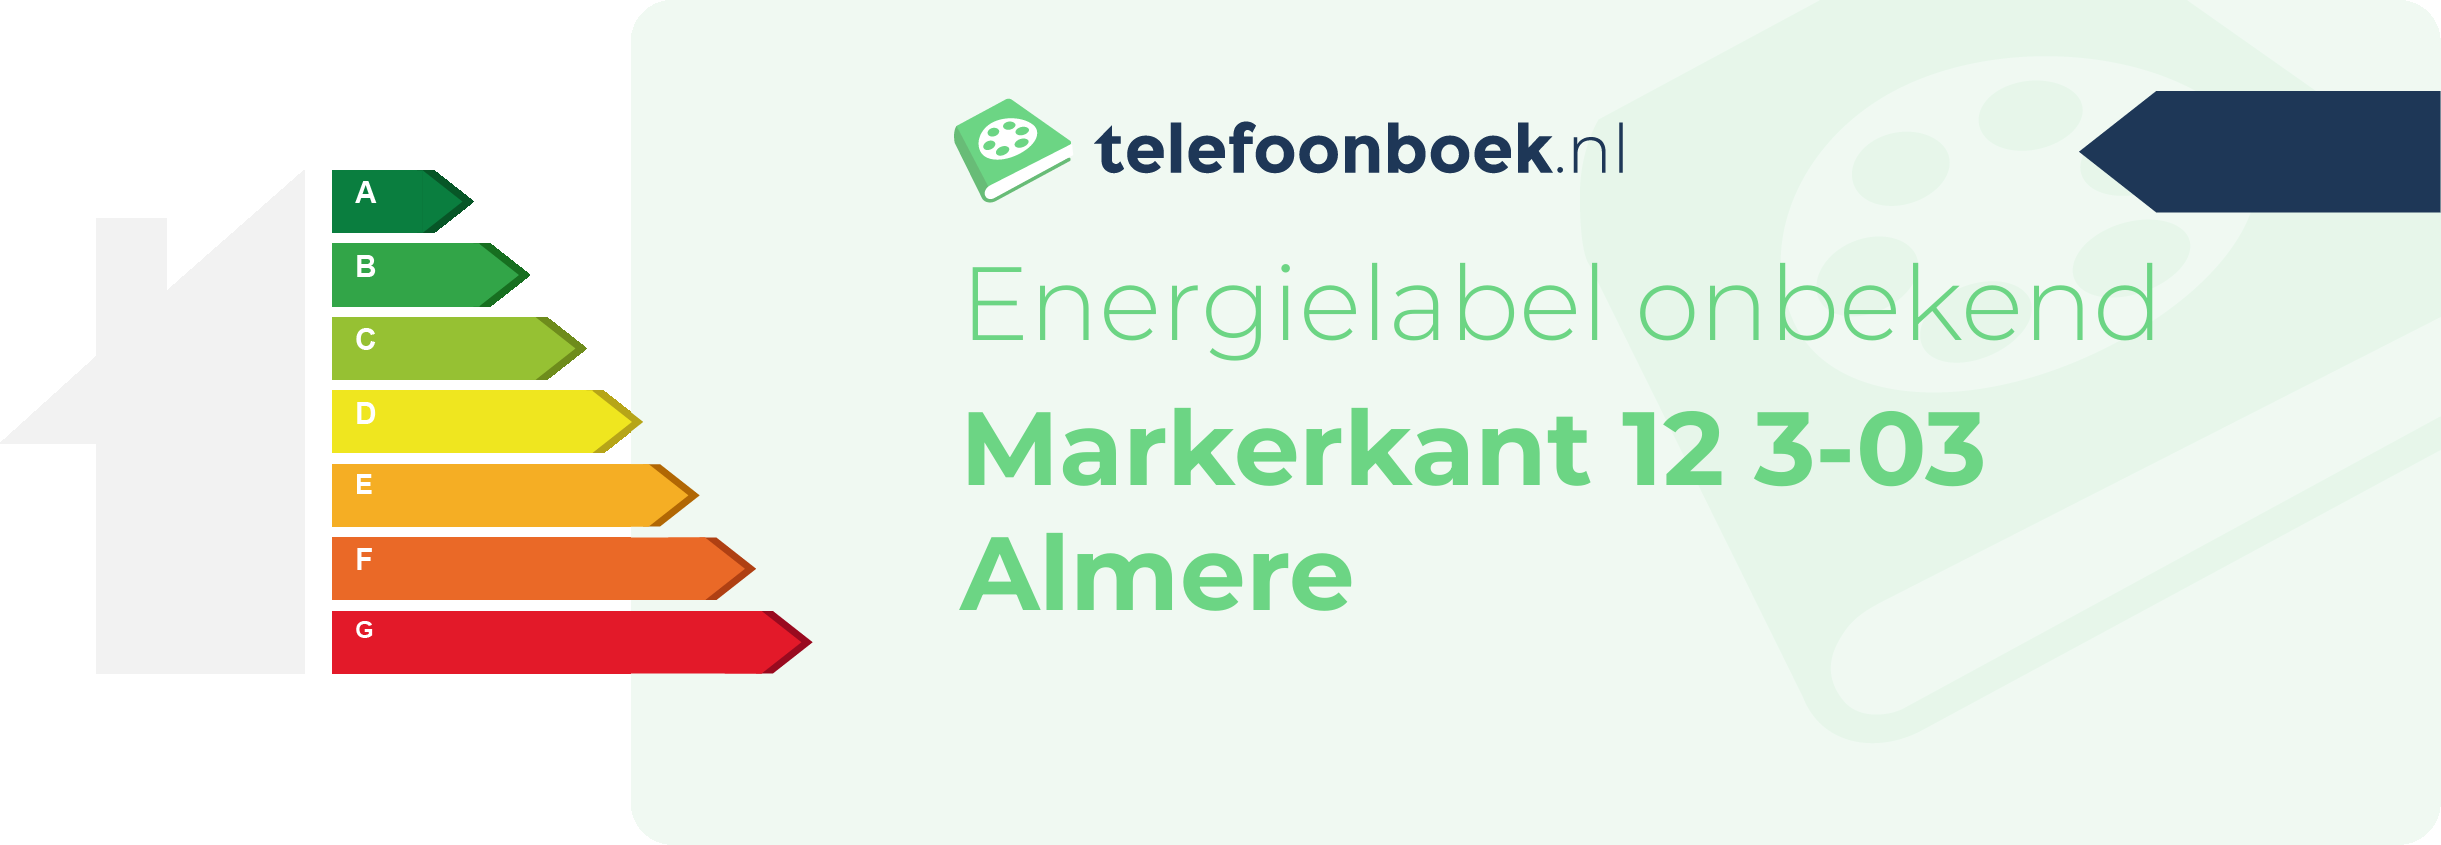 Energielabel Markerkant 12 3-03 Almere